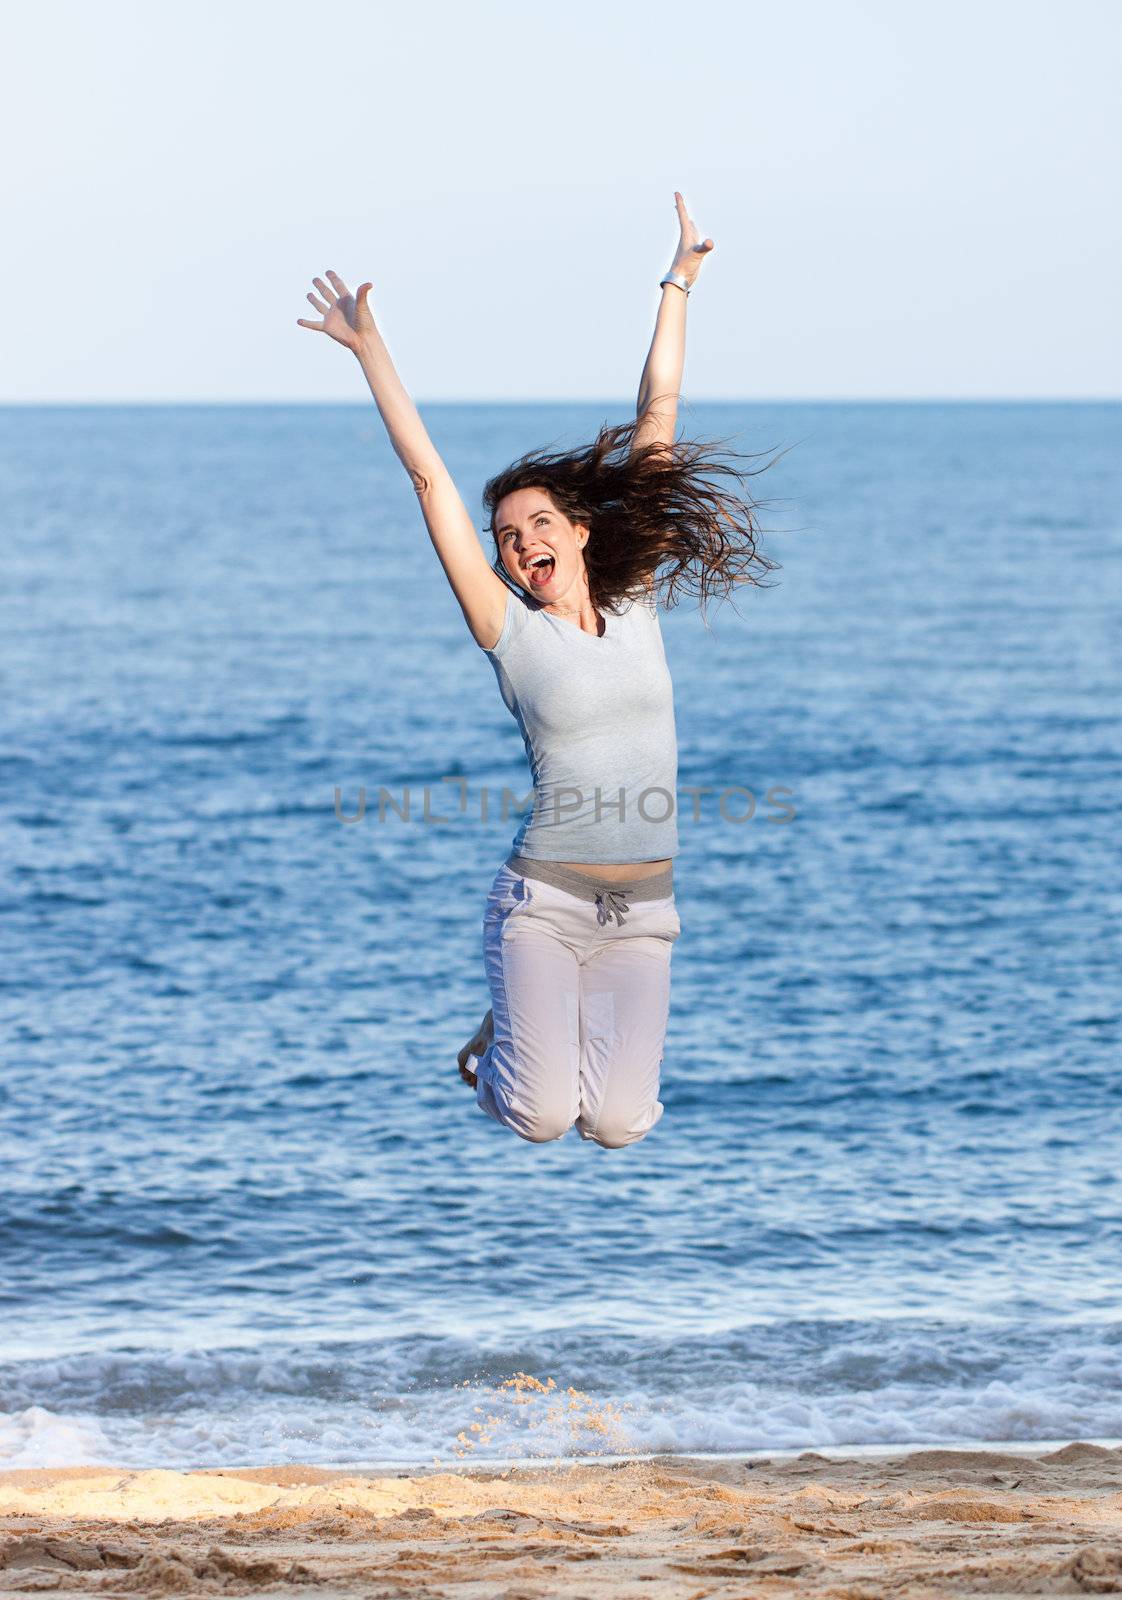 Woman jumping on a beach by Jaykayl